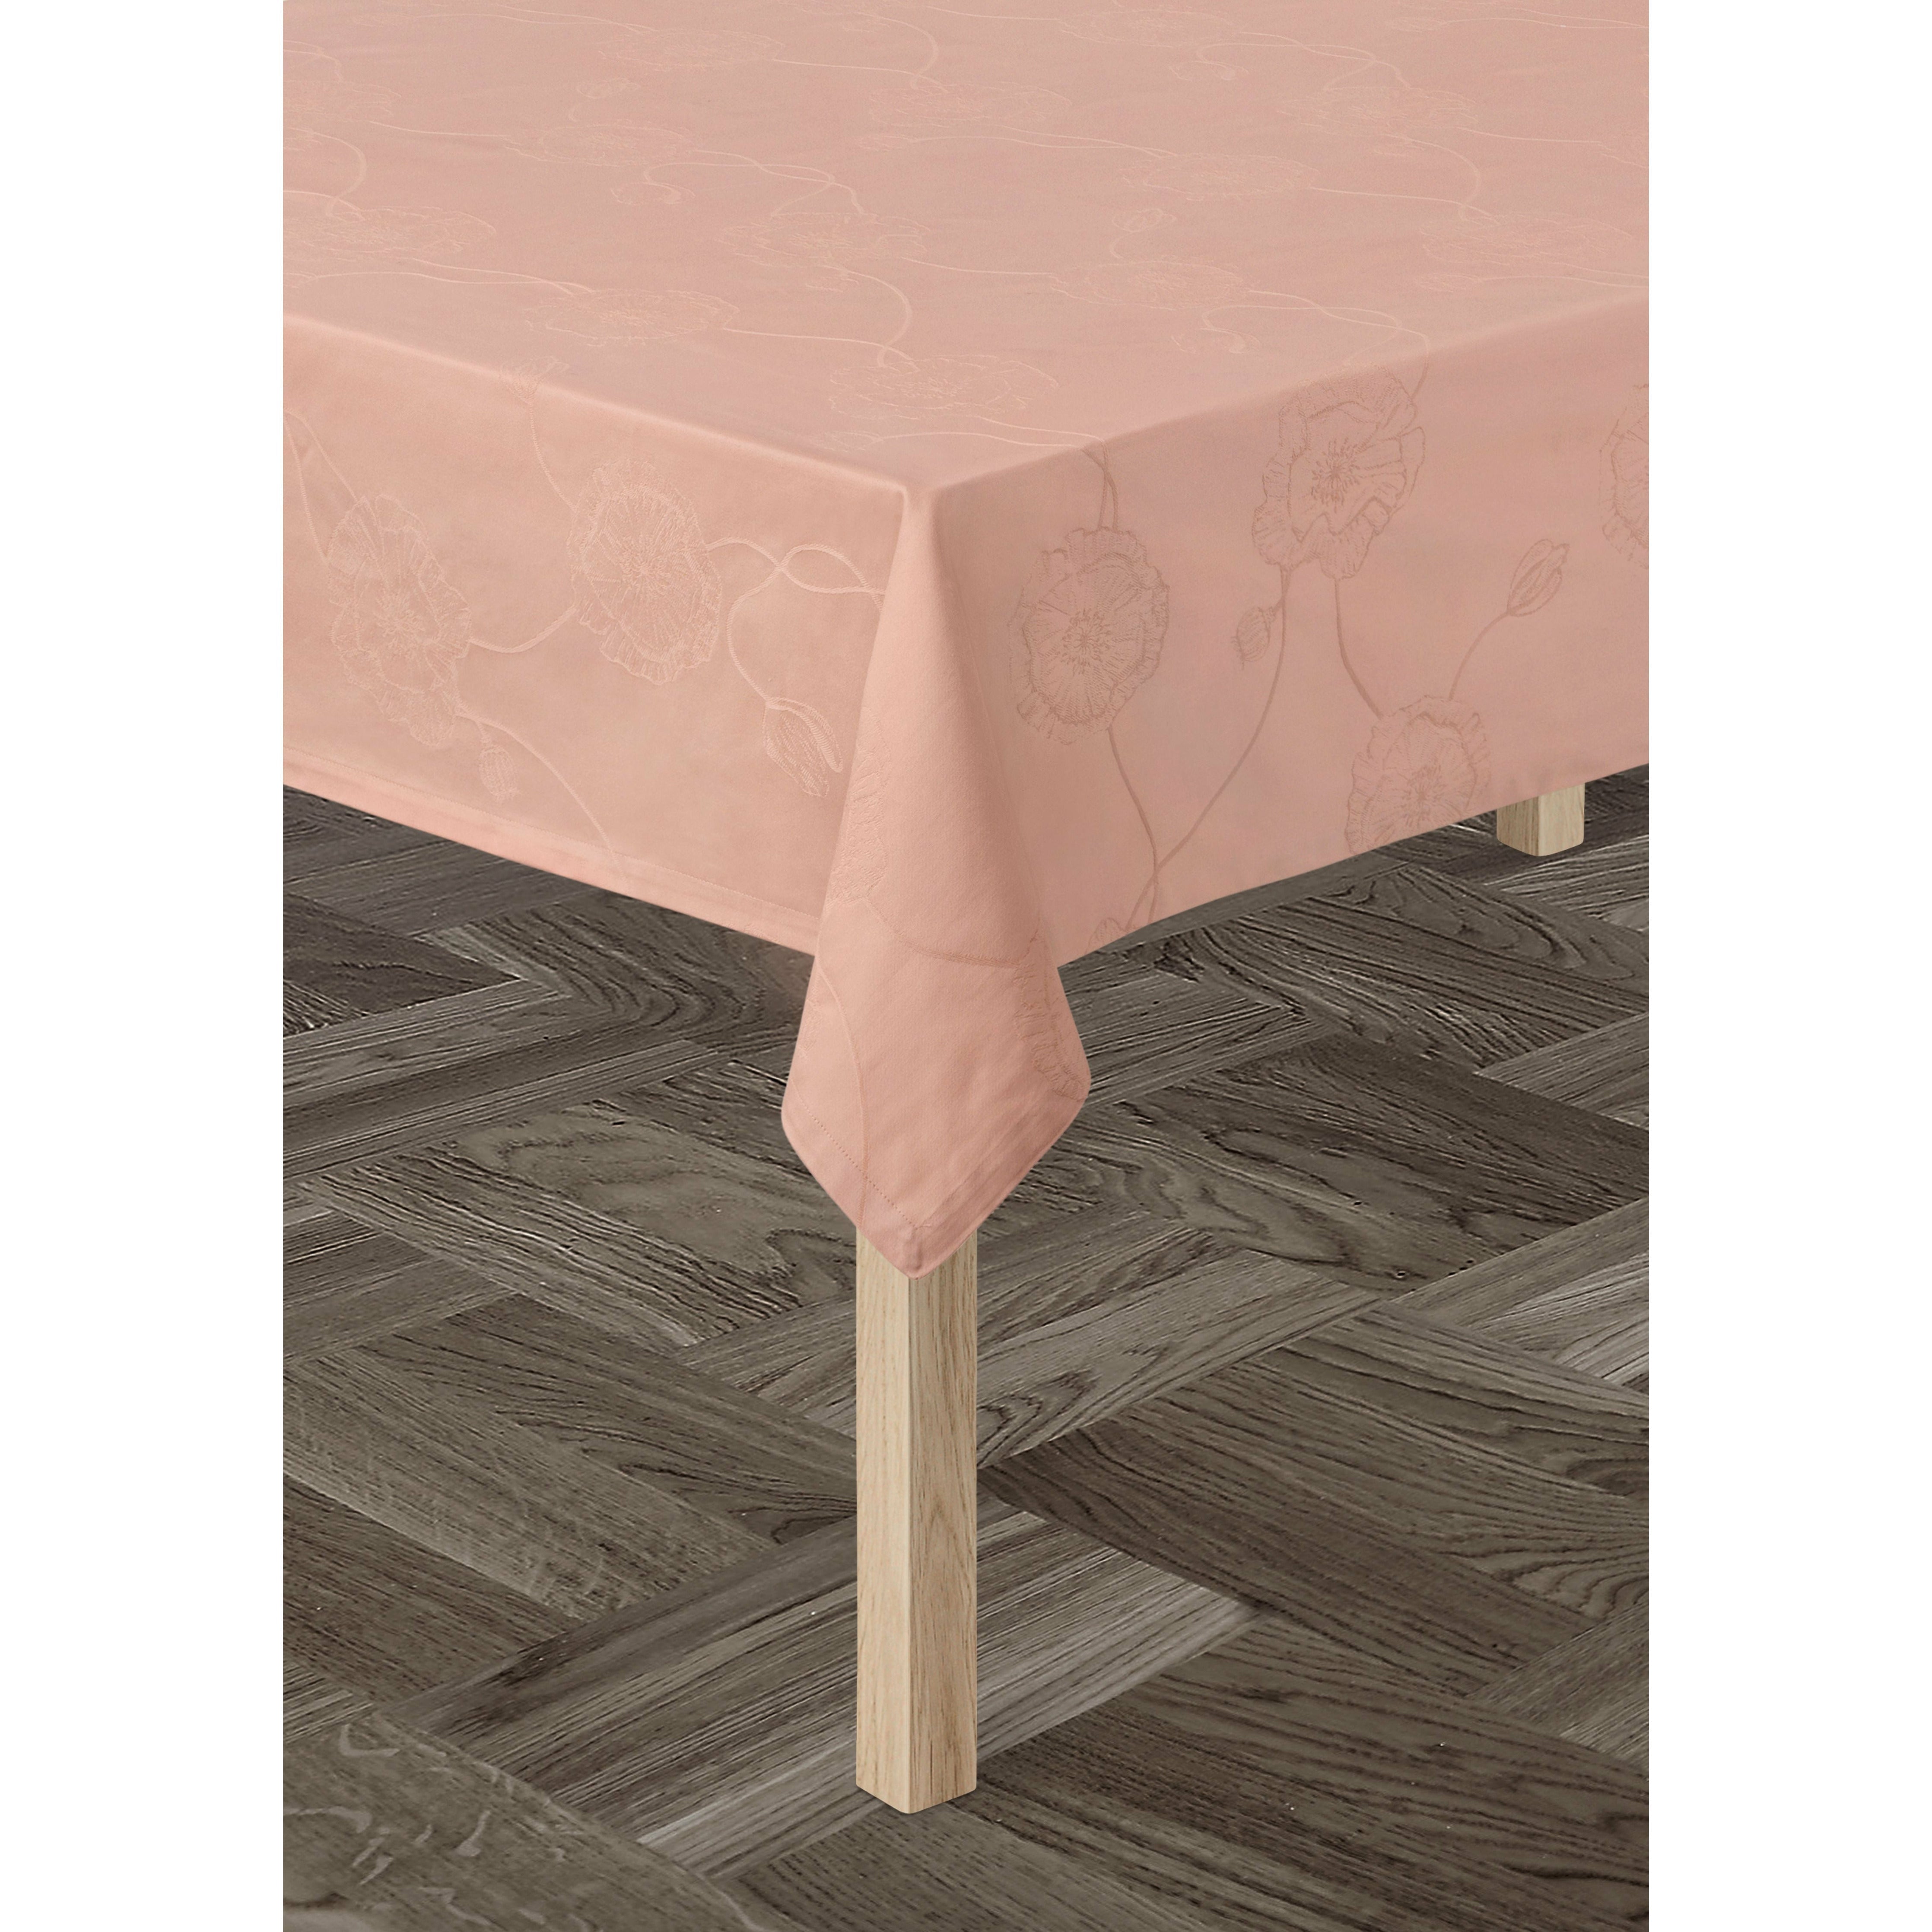 Kähler Hammershøi Poppy Table Doek 150x270 cm, naakt